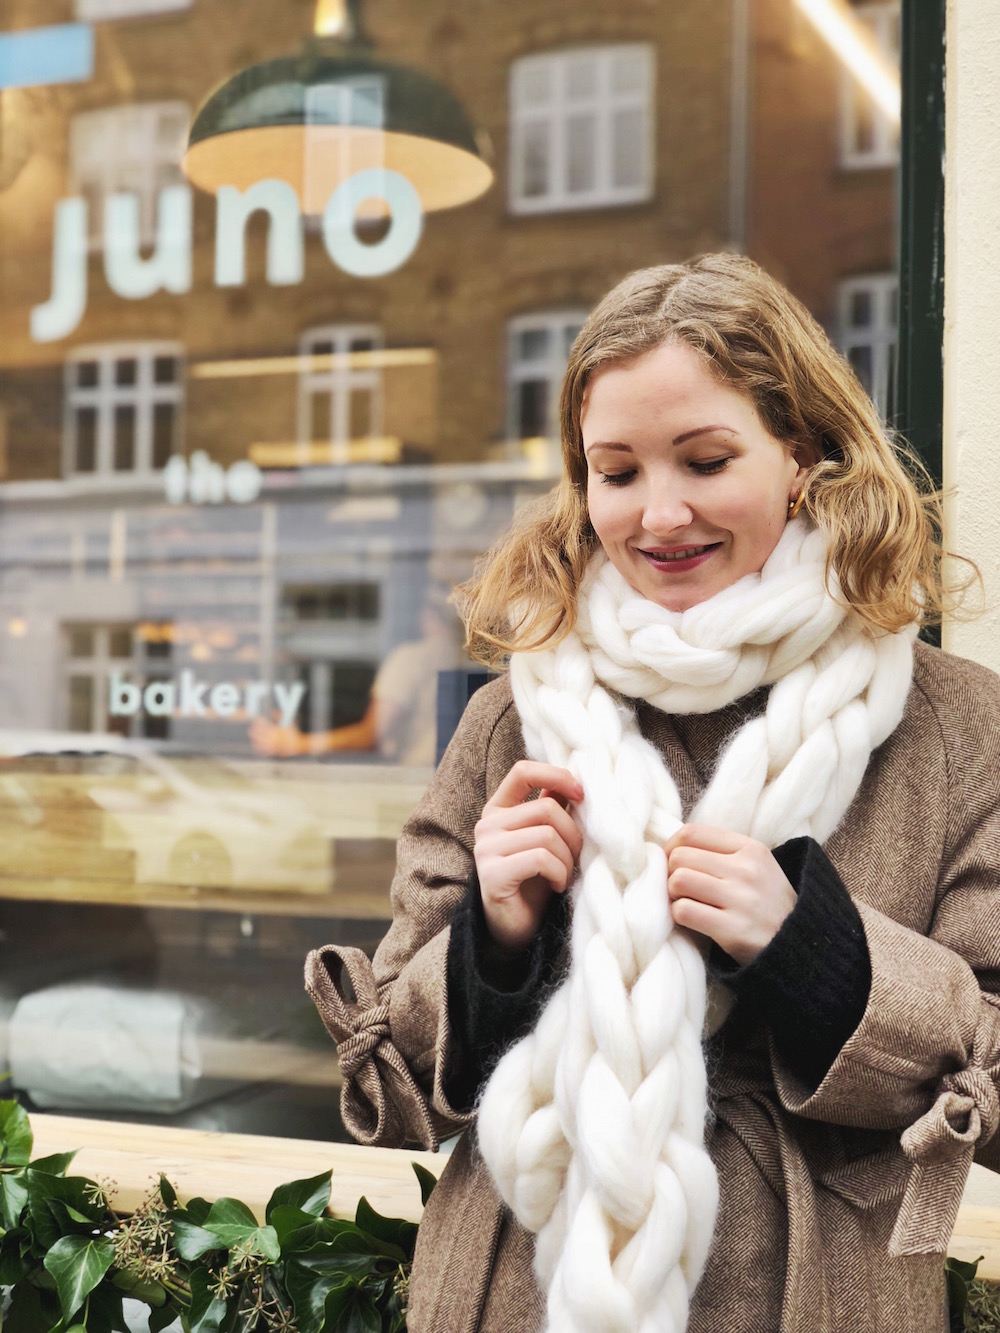 Juno The Bakery Denmark